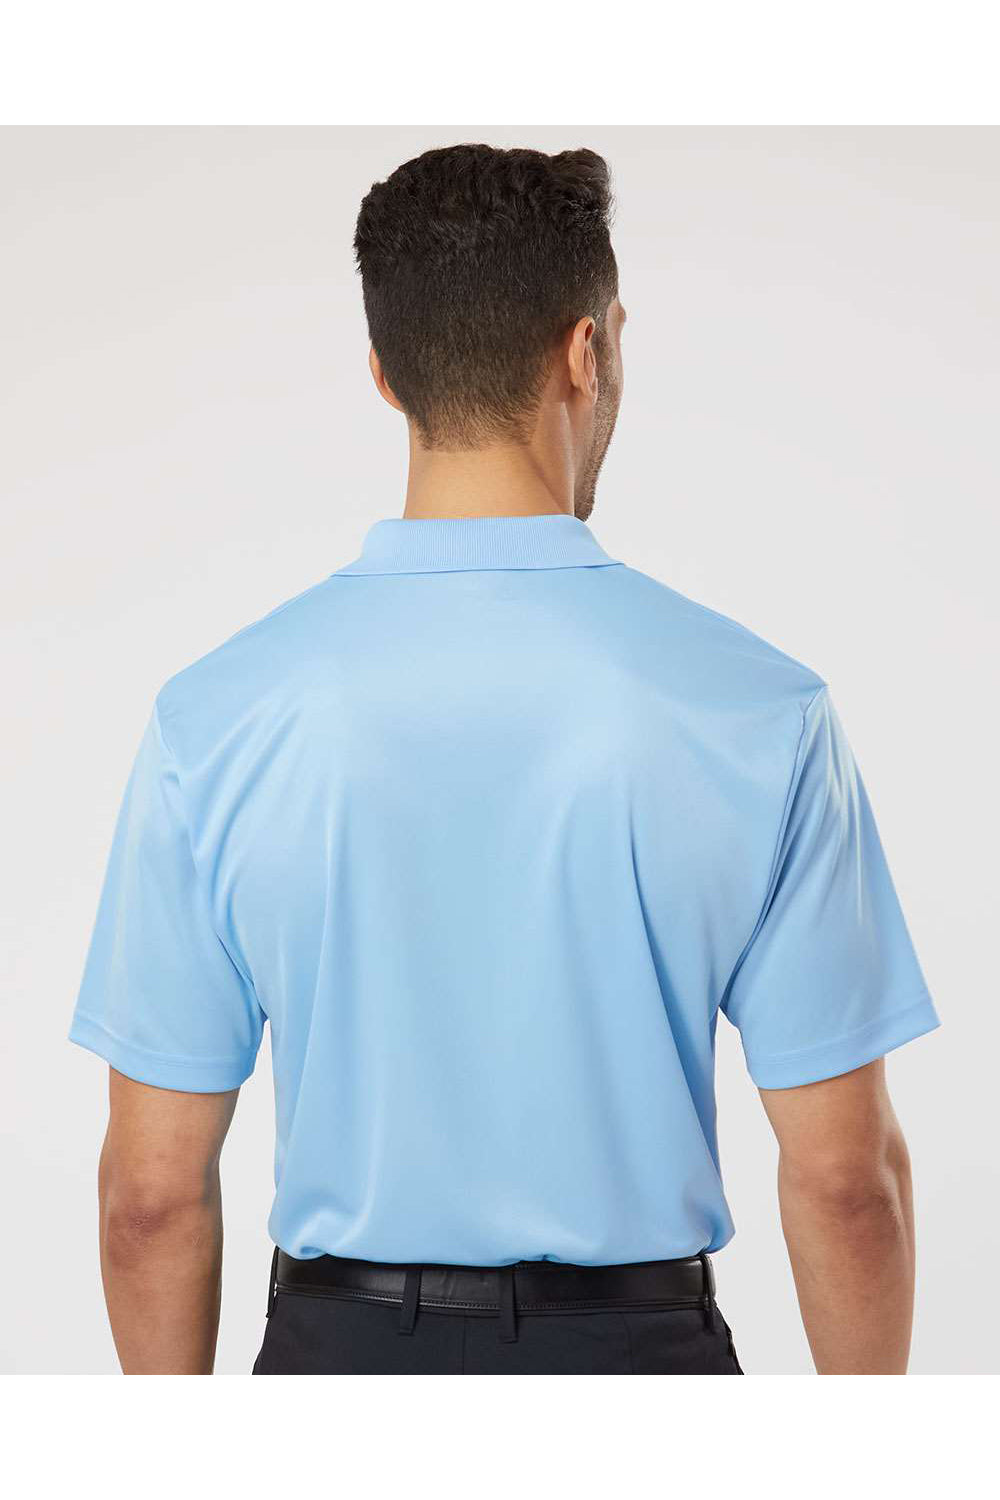 Paragon 500 Mens Sebring Performance Short Sleeve Polo Shirt Blue Mist Model Back